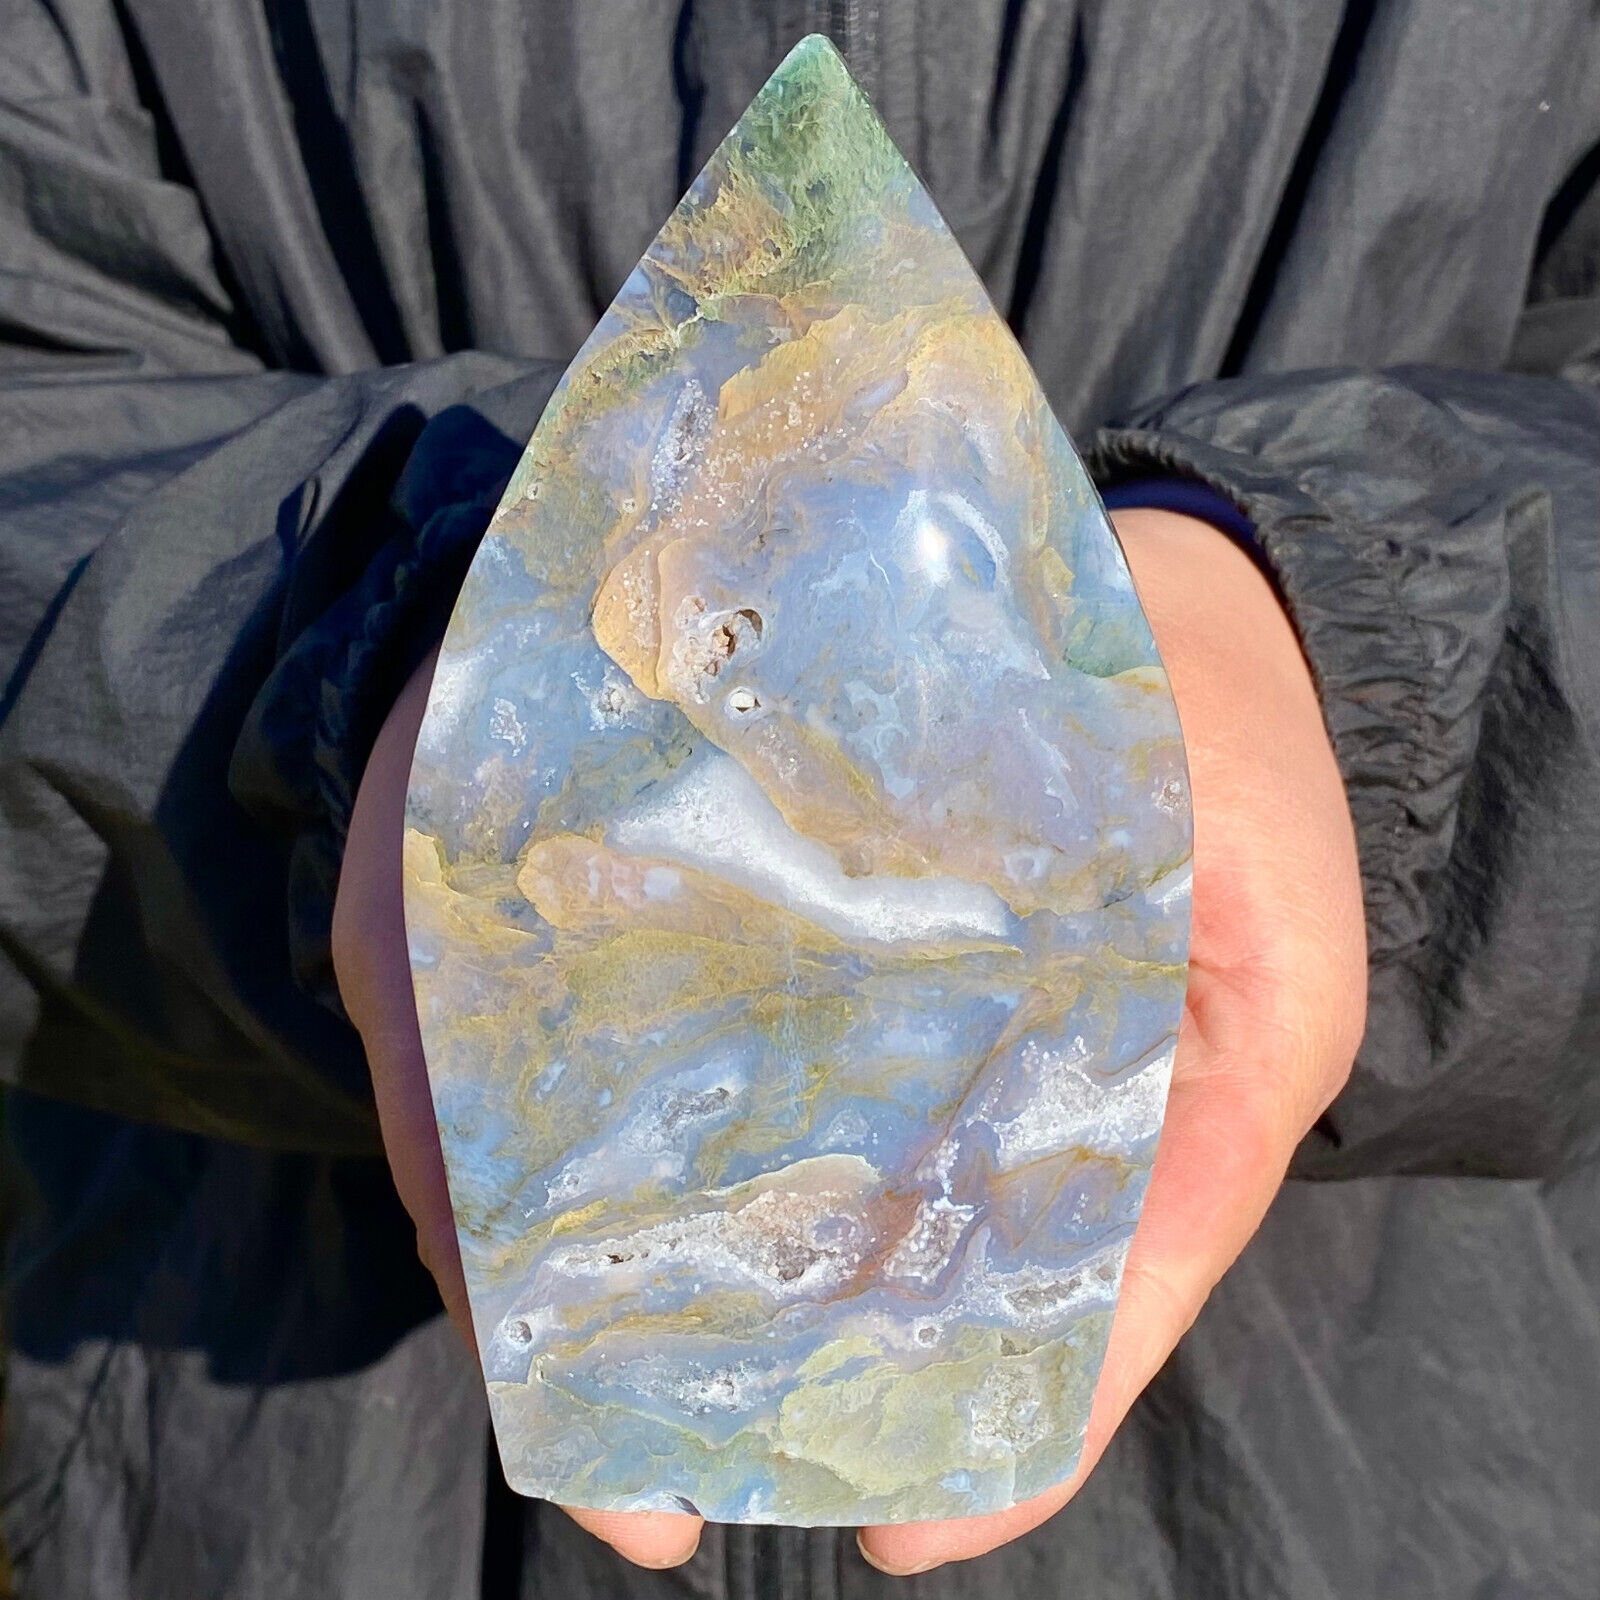 485G Natural agate water grass quartz Slice polishing healing meditation